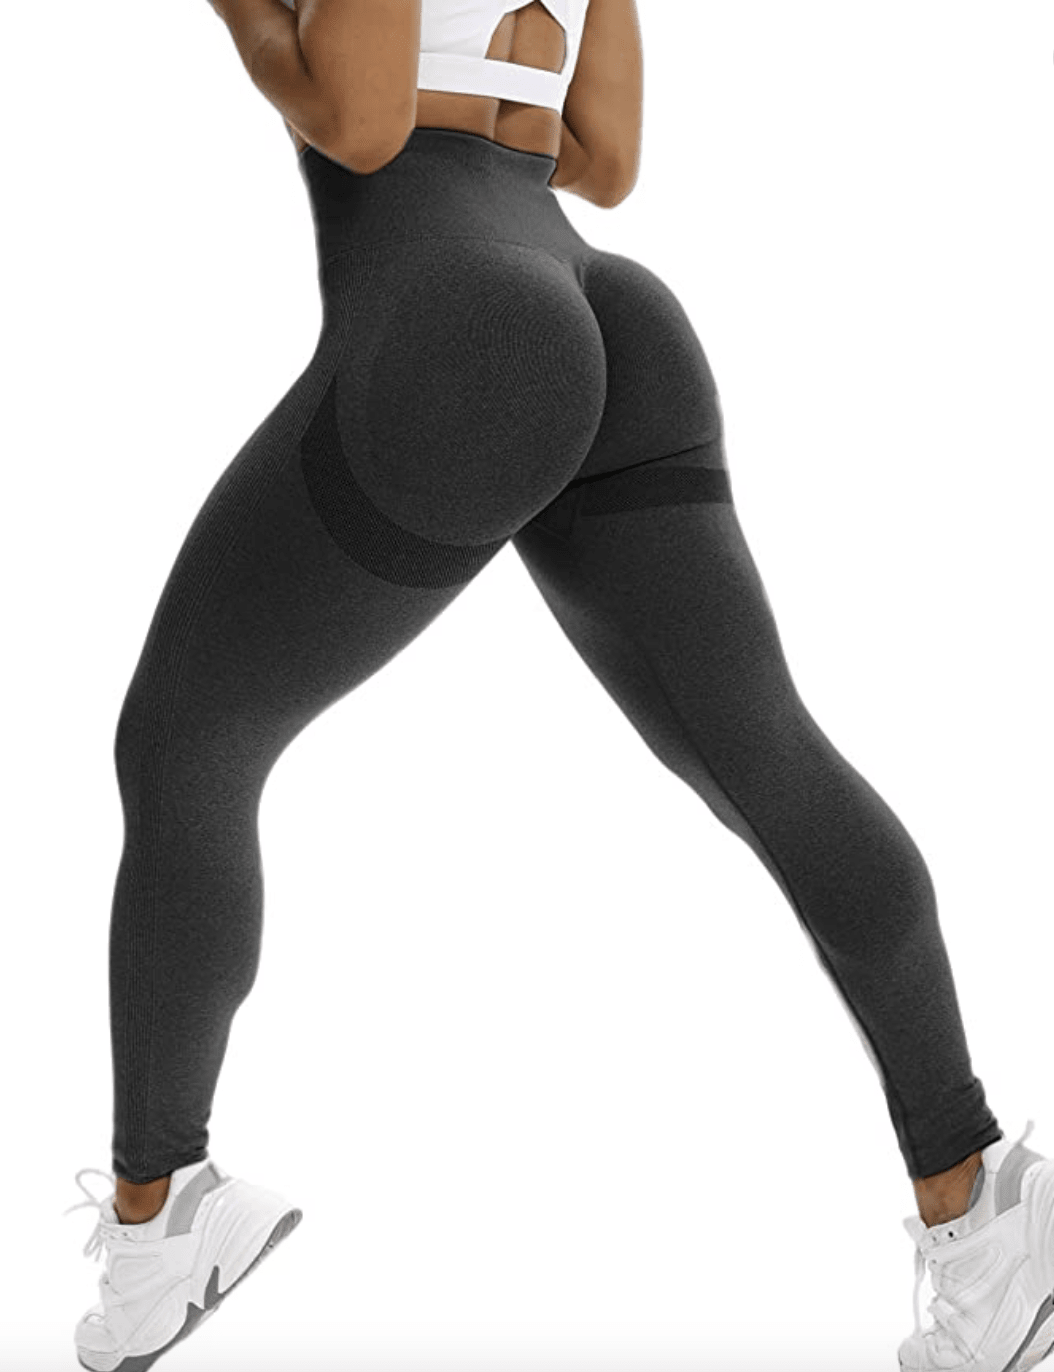 SAITI TIK Tok Leggings for Women Butt Lifting Leggings High Waisted Tummy Control Yoga Pants for Gym Running Workout 